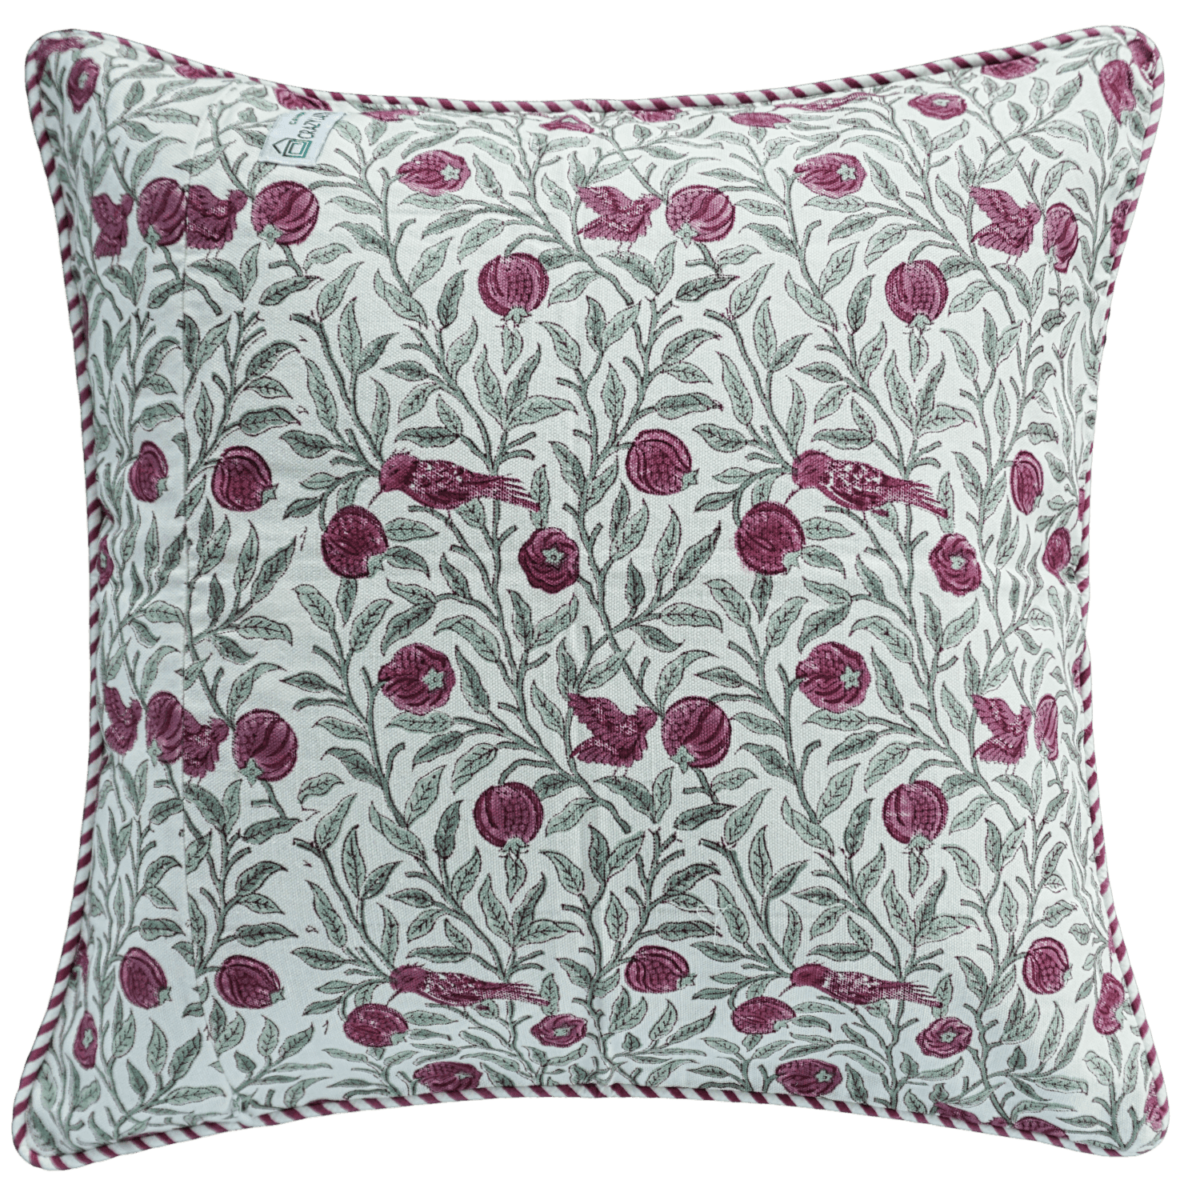 tree bird hand printed cotton decorative pillow 18"*18"